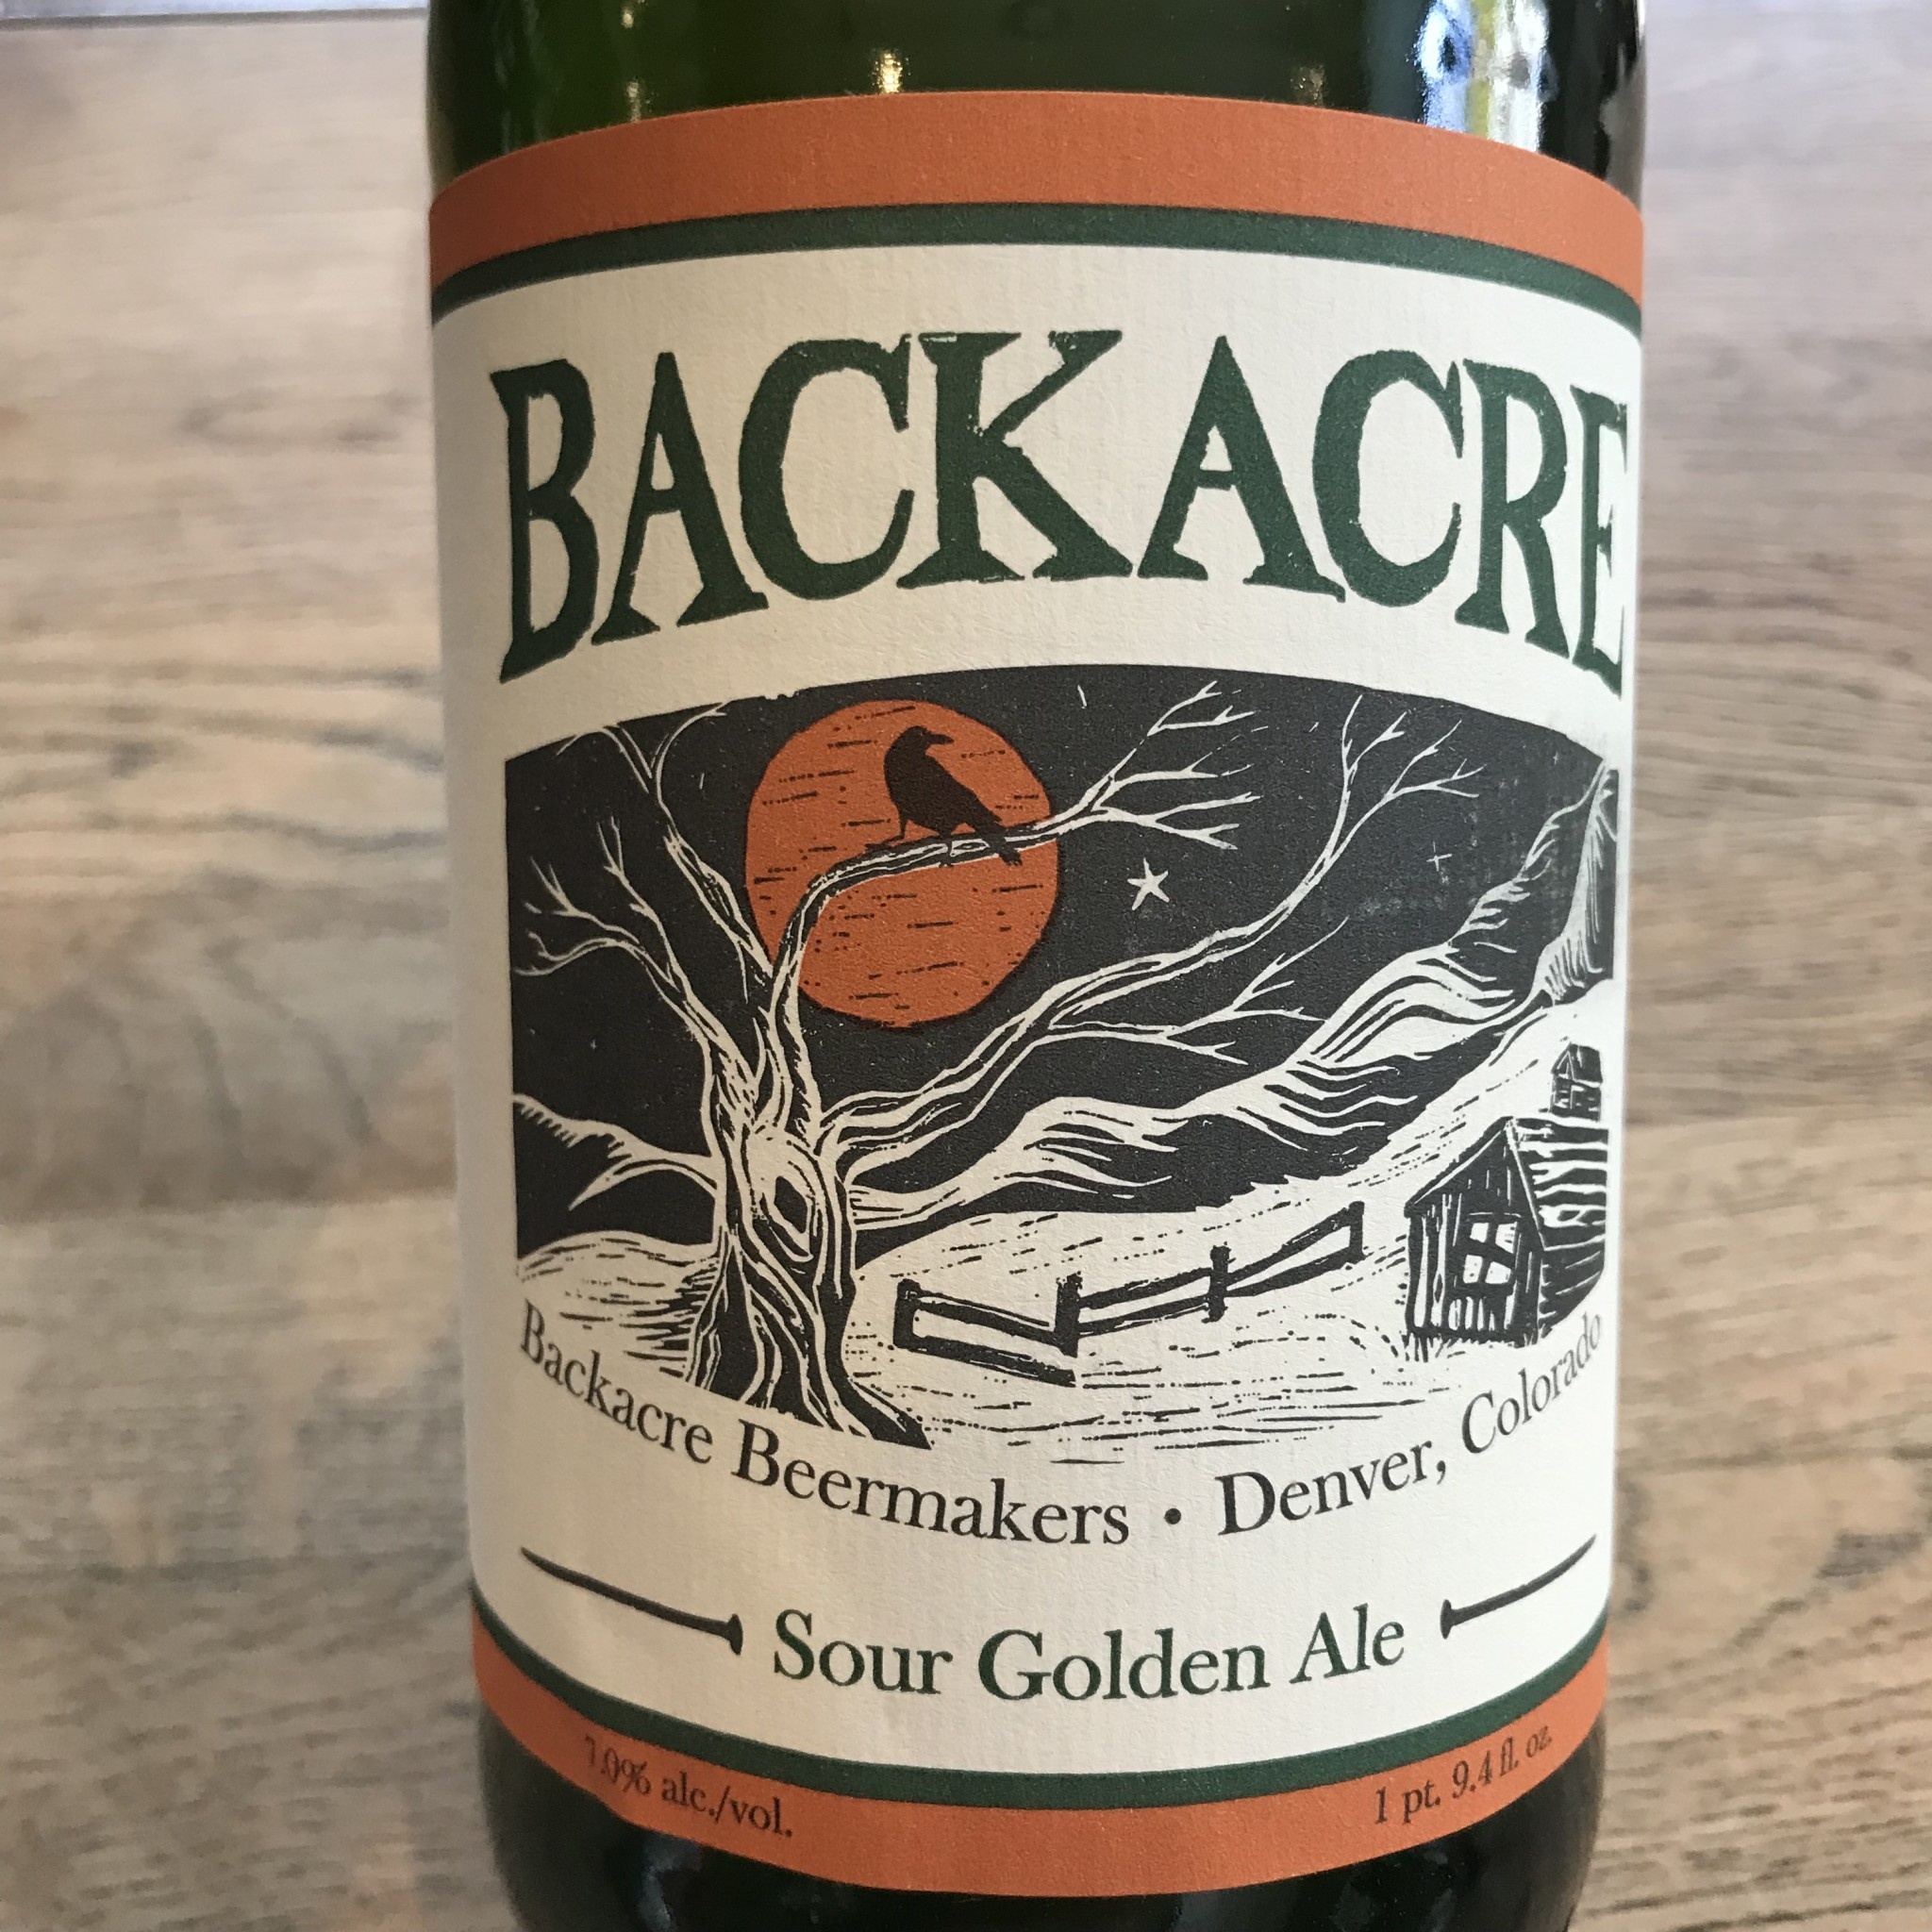 USA Backacre Sour Golden Ale 750ml